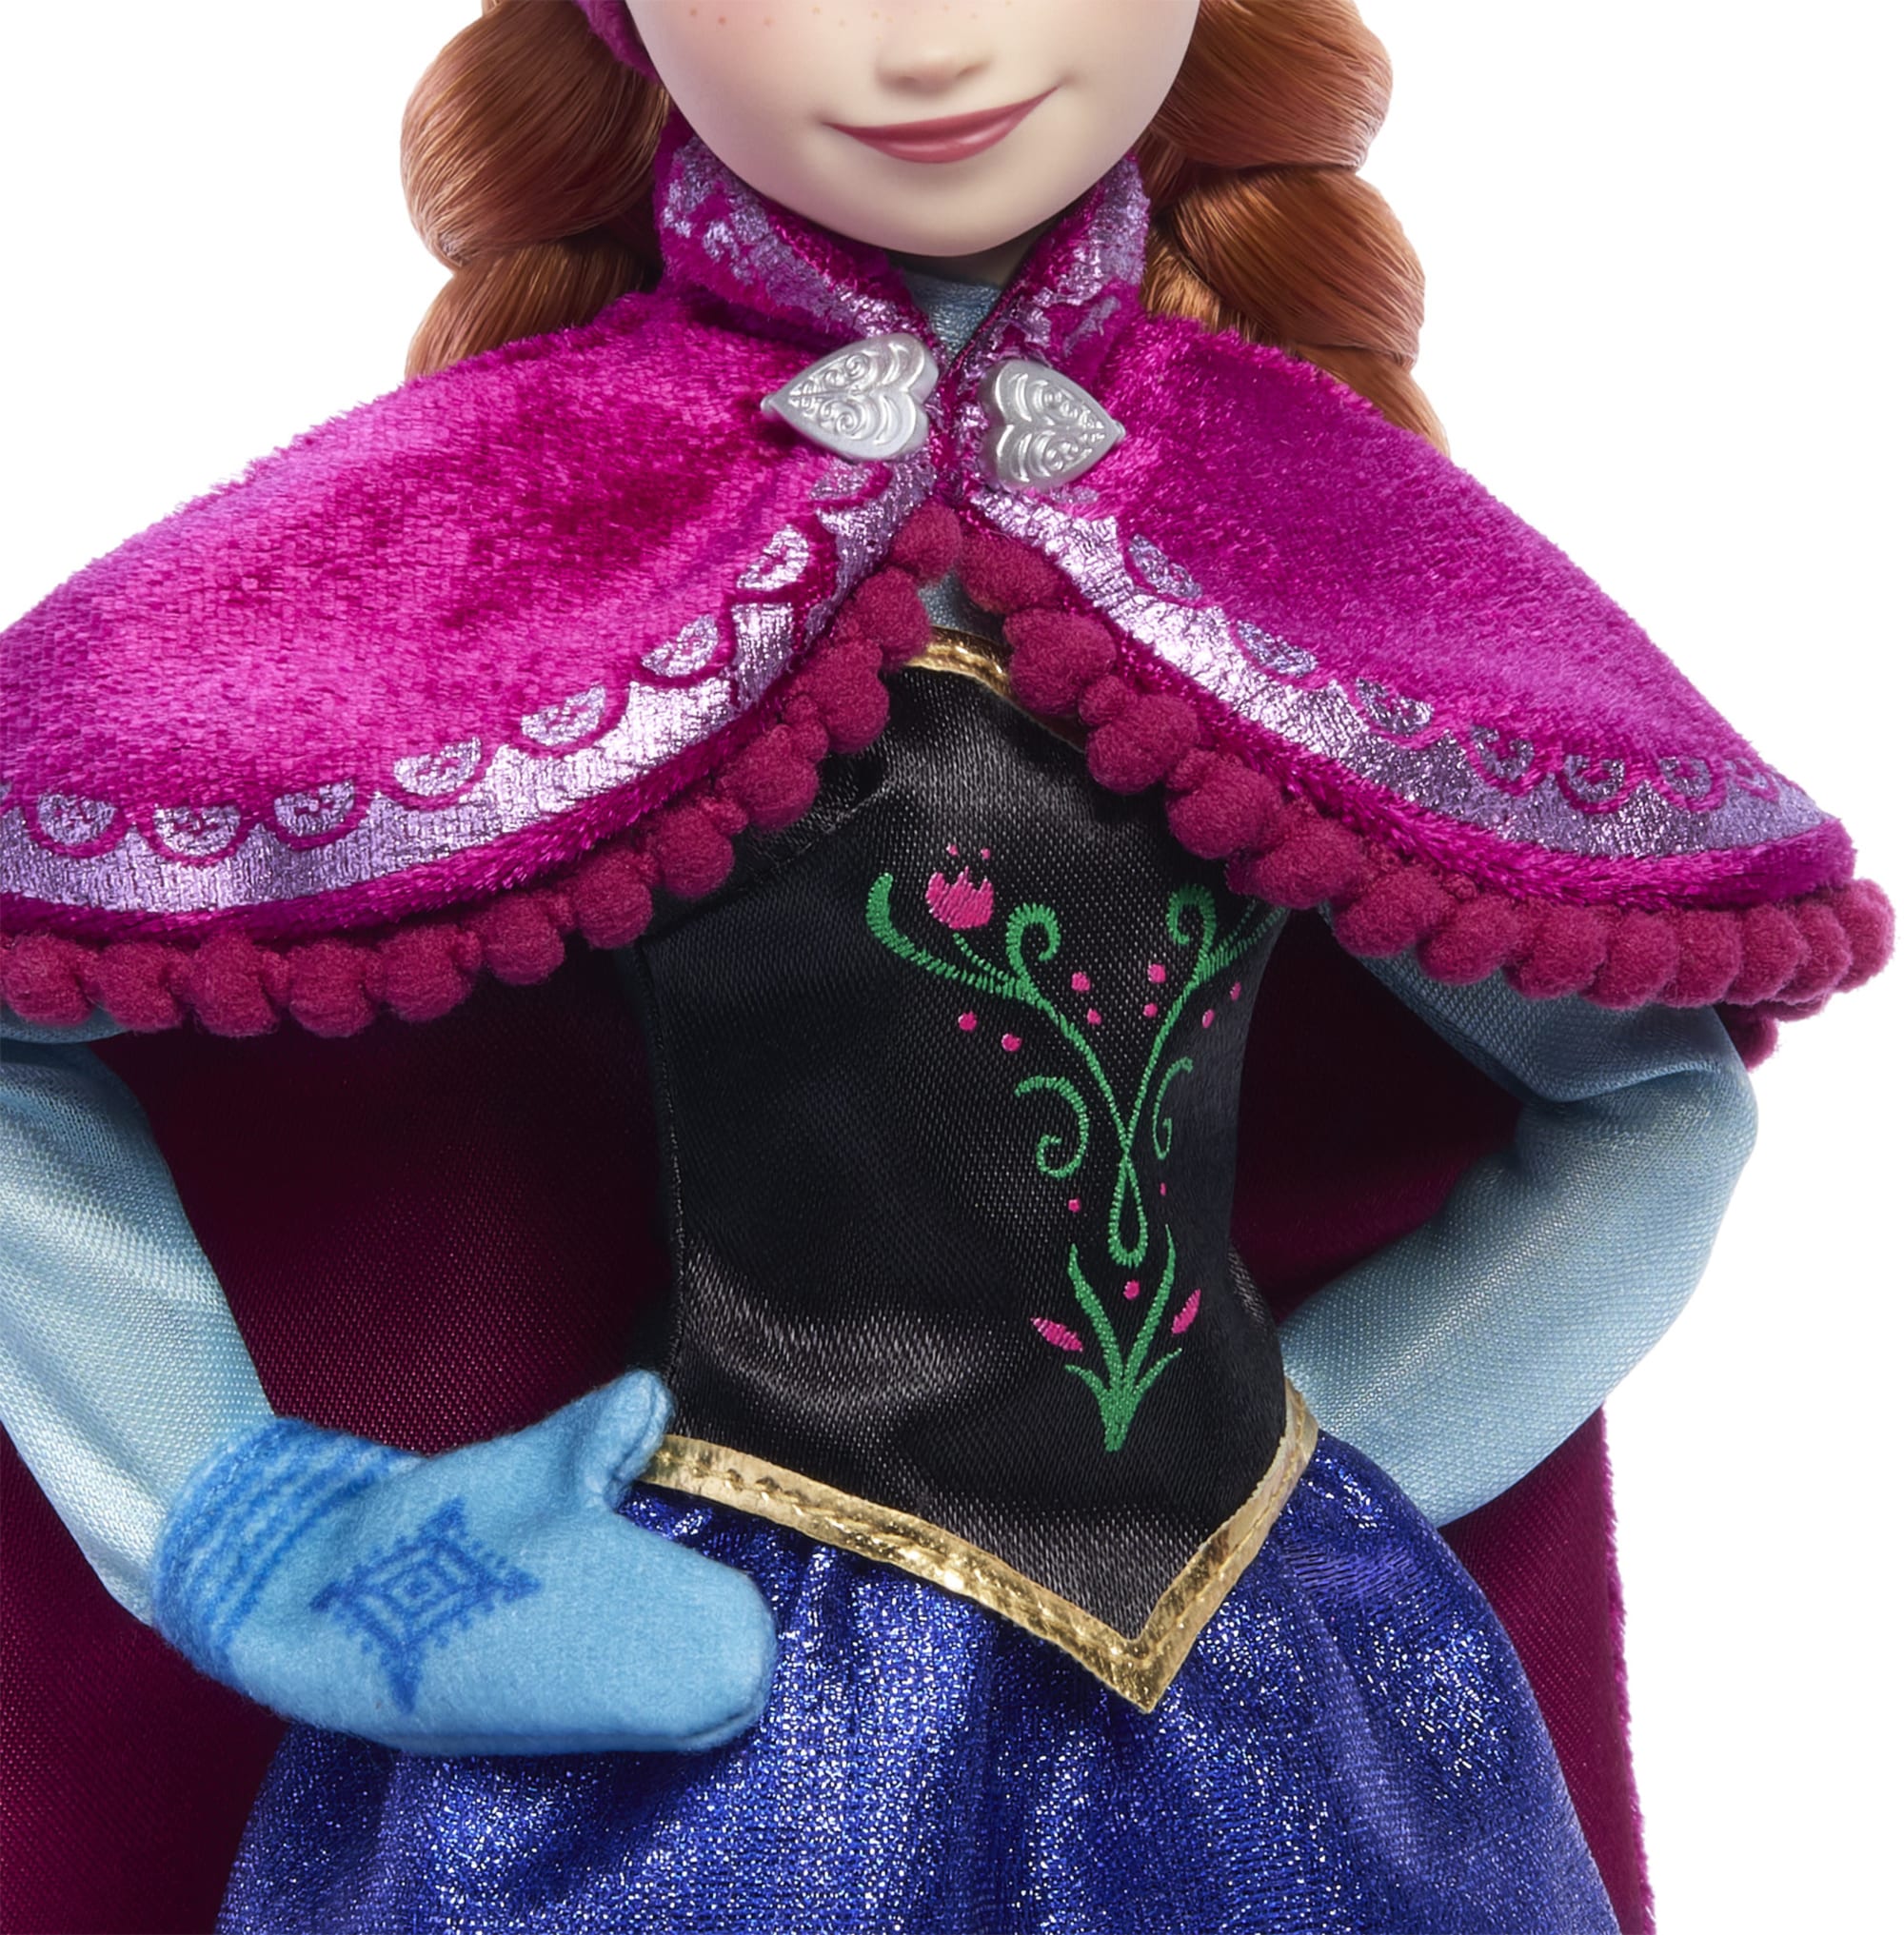 Boneca Anna: Disney Frozen - Hasbro - Toyshow Tudo de Marvel DC